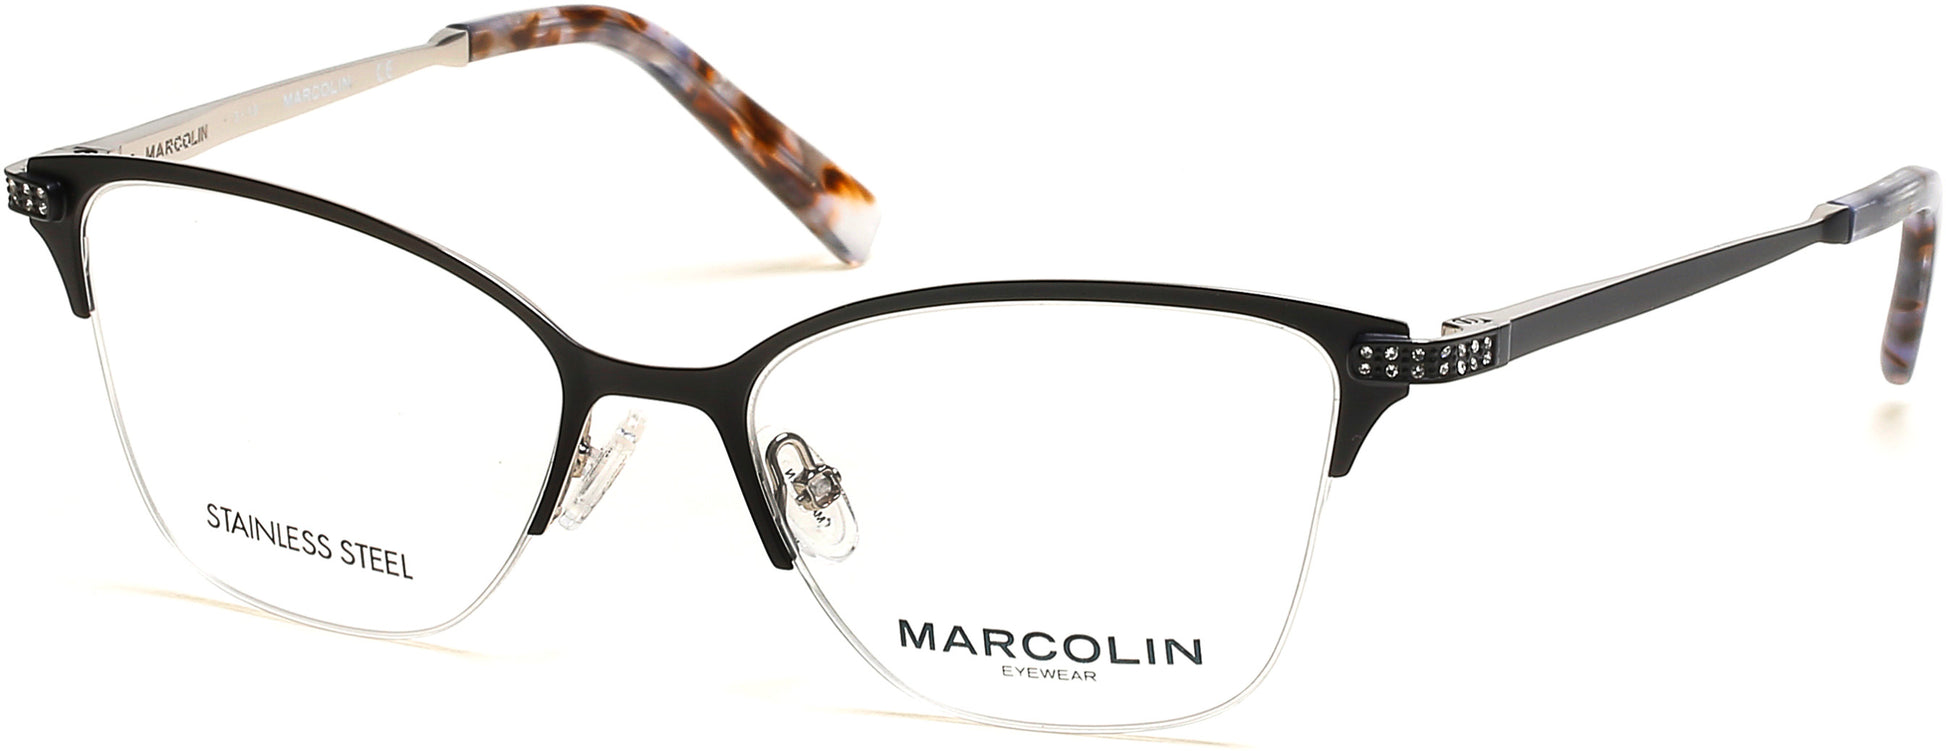 Marcolin MA5020 Square Eyeglasses 002-002 - Matte Black